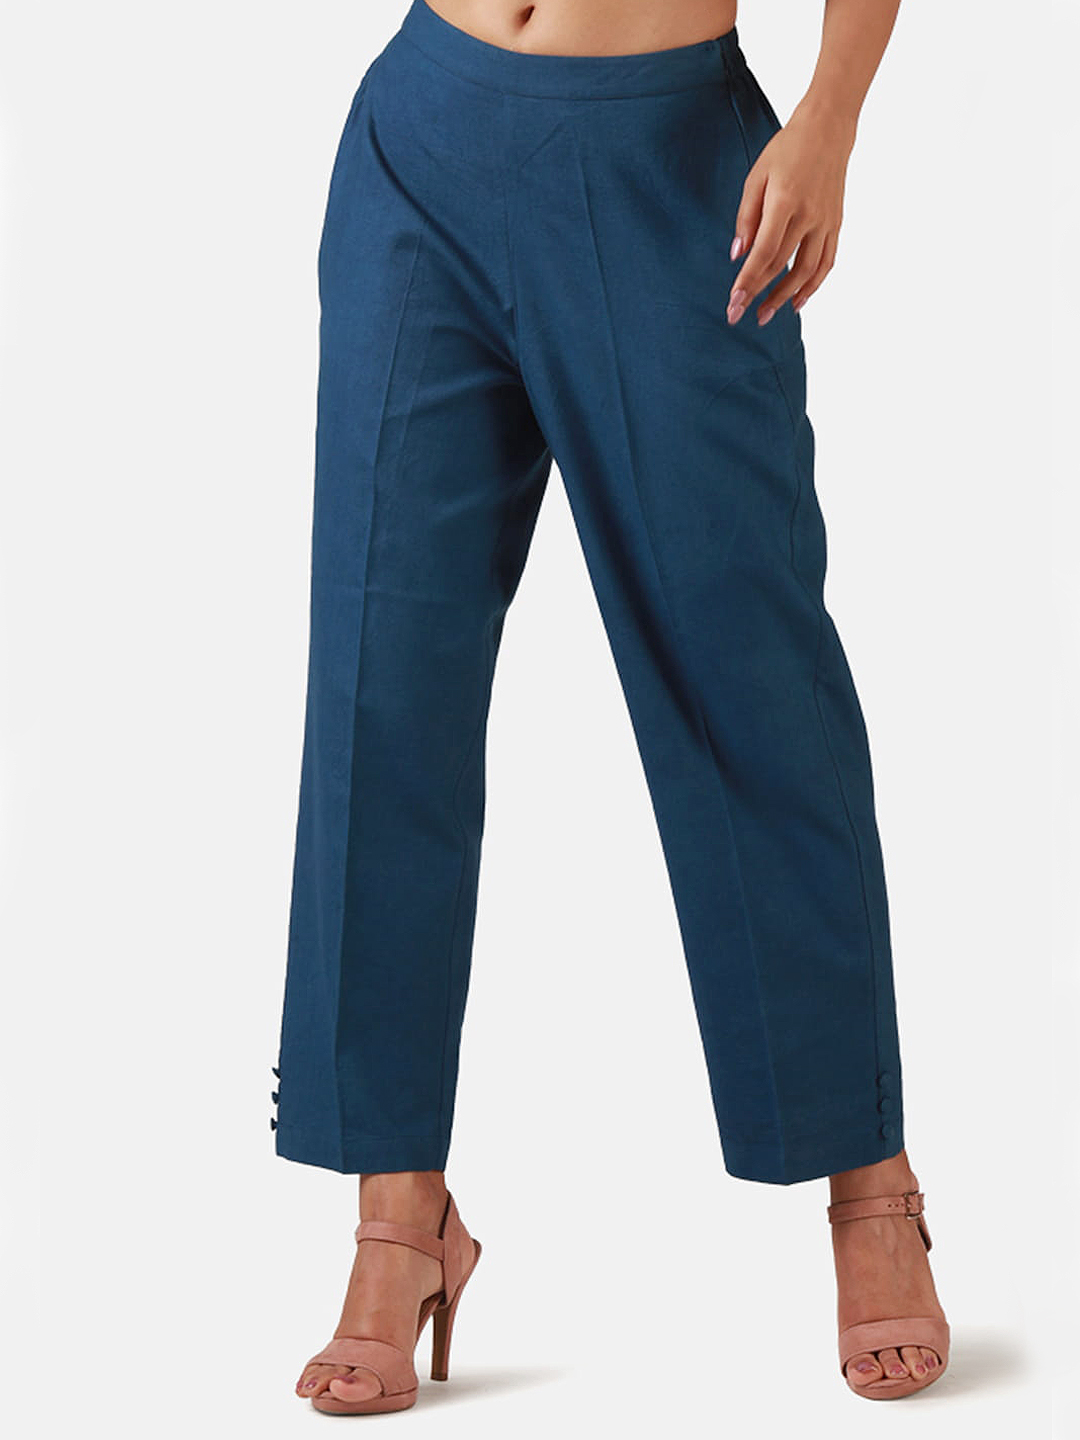 Beige Cotton Khaadi Harem Pants, Women's Bottoms, 100% Khadi Material, Yoga  Magician Haram Pants, Women's Bottoms Pants - Etsy